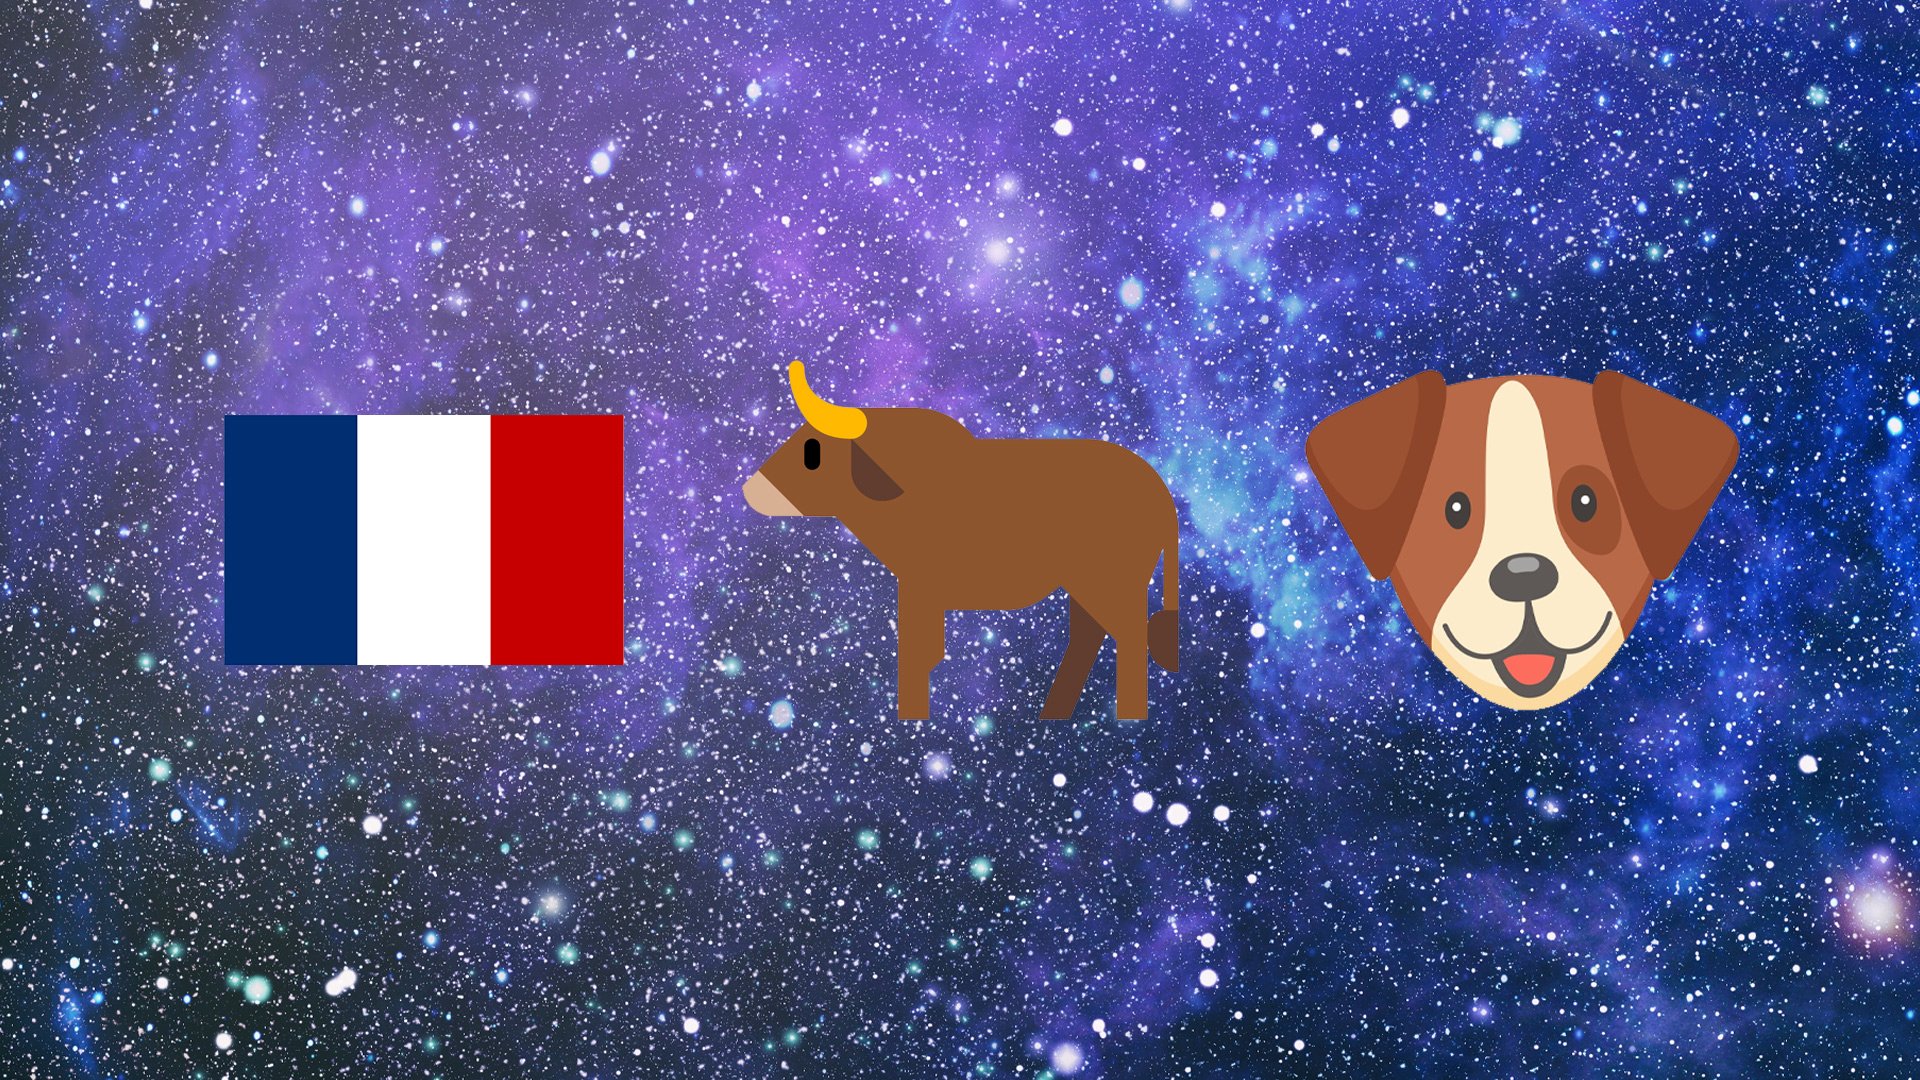 French flag, bull, dog